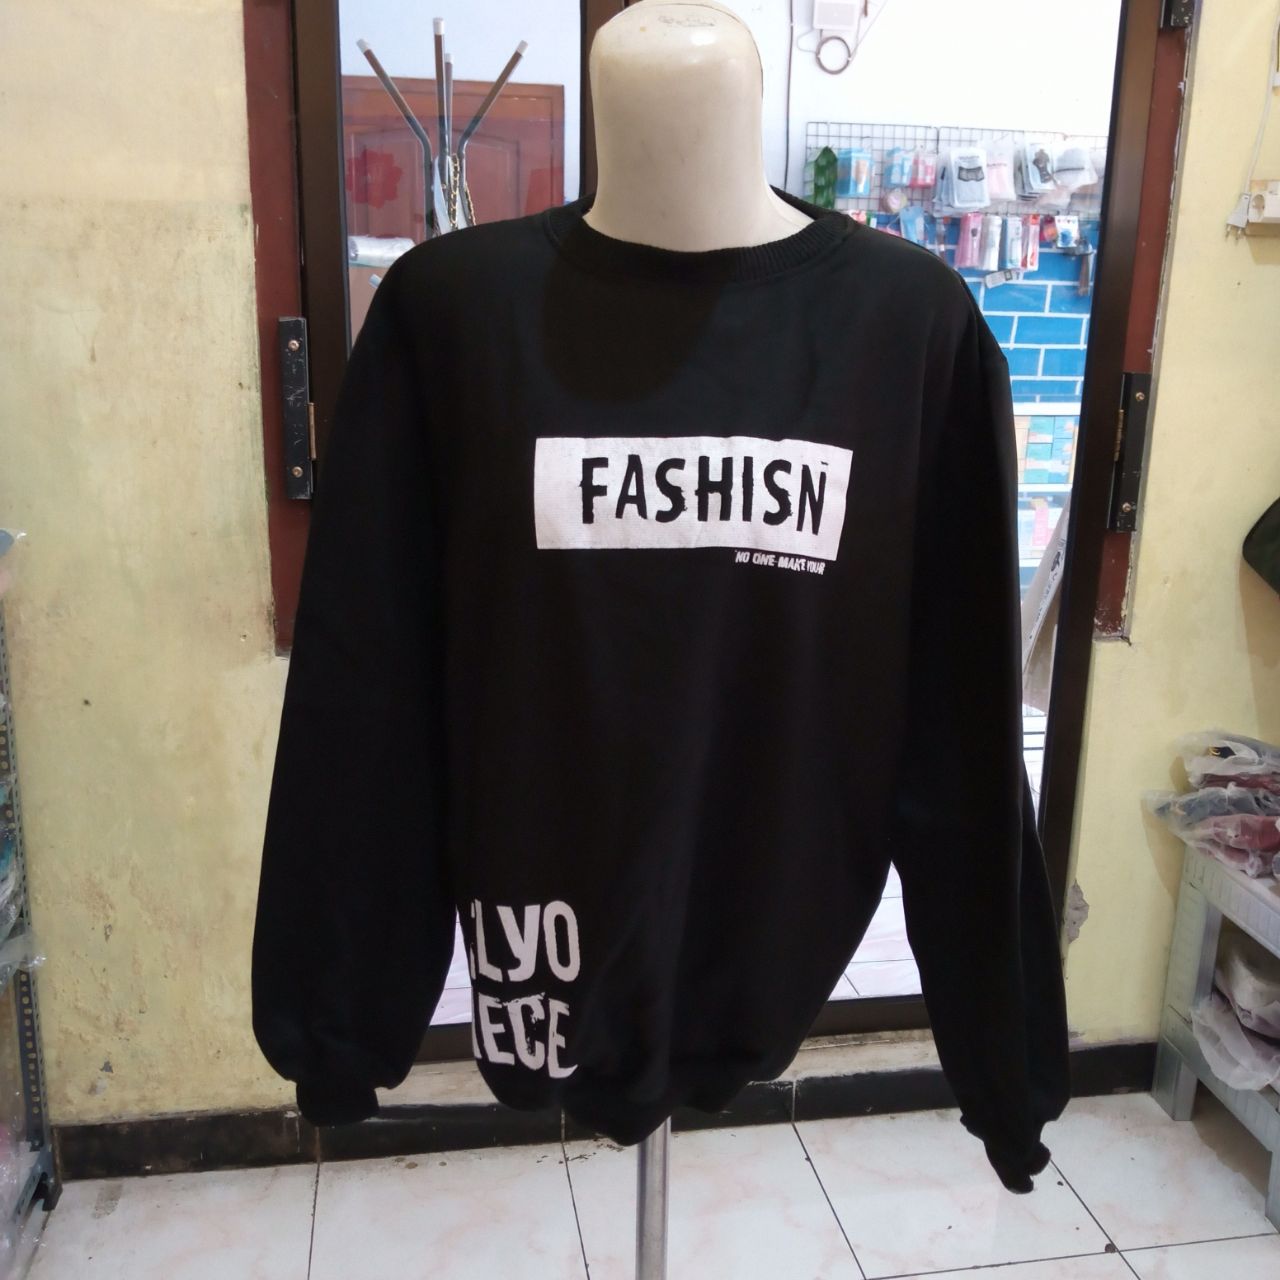 ini adalah Sweater Fashisn Hitam, size: LD 90cm, Panjang 60cm, material: Fleece, color: black, brand: jaketindonesia, age_group: all ages, gender: unisex